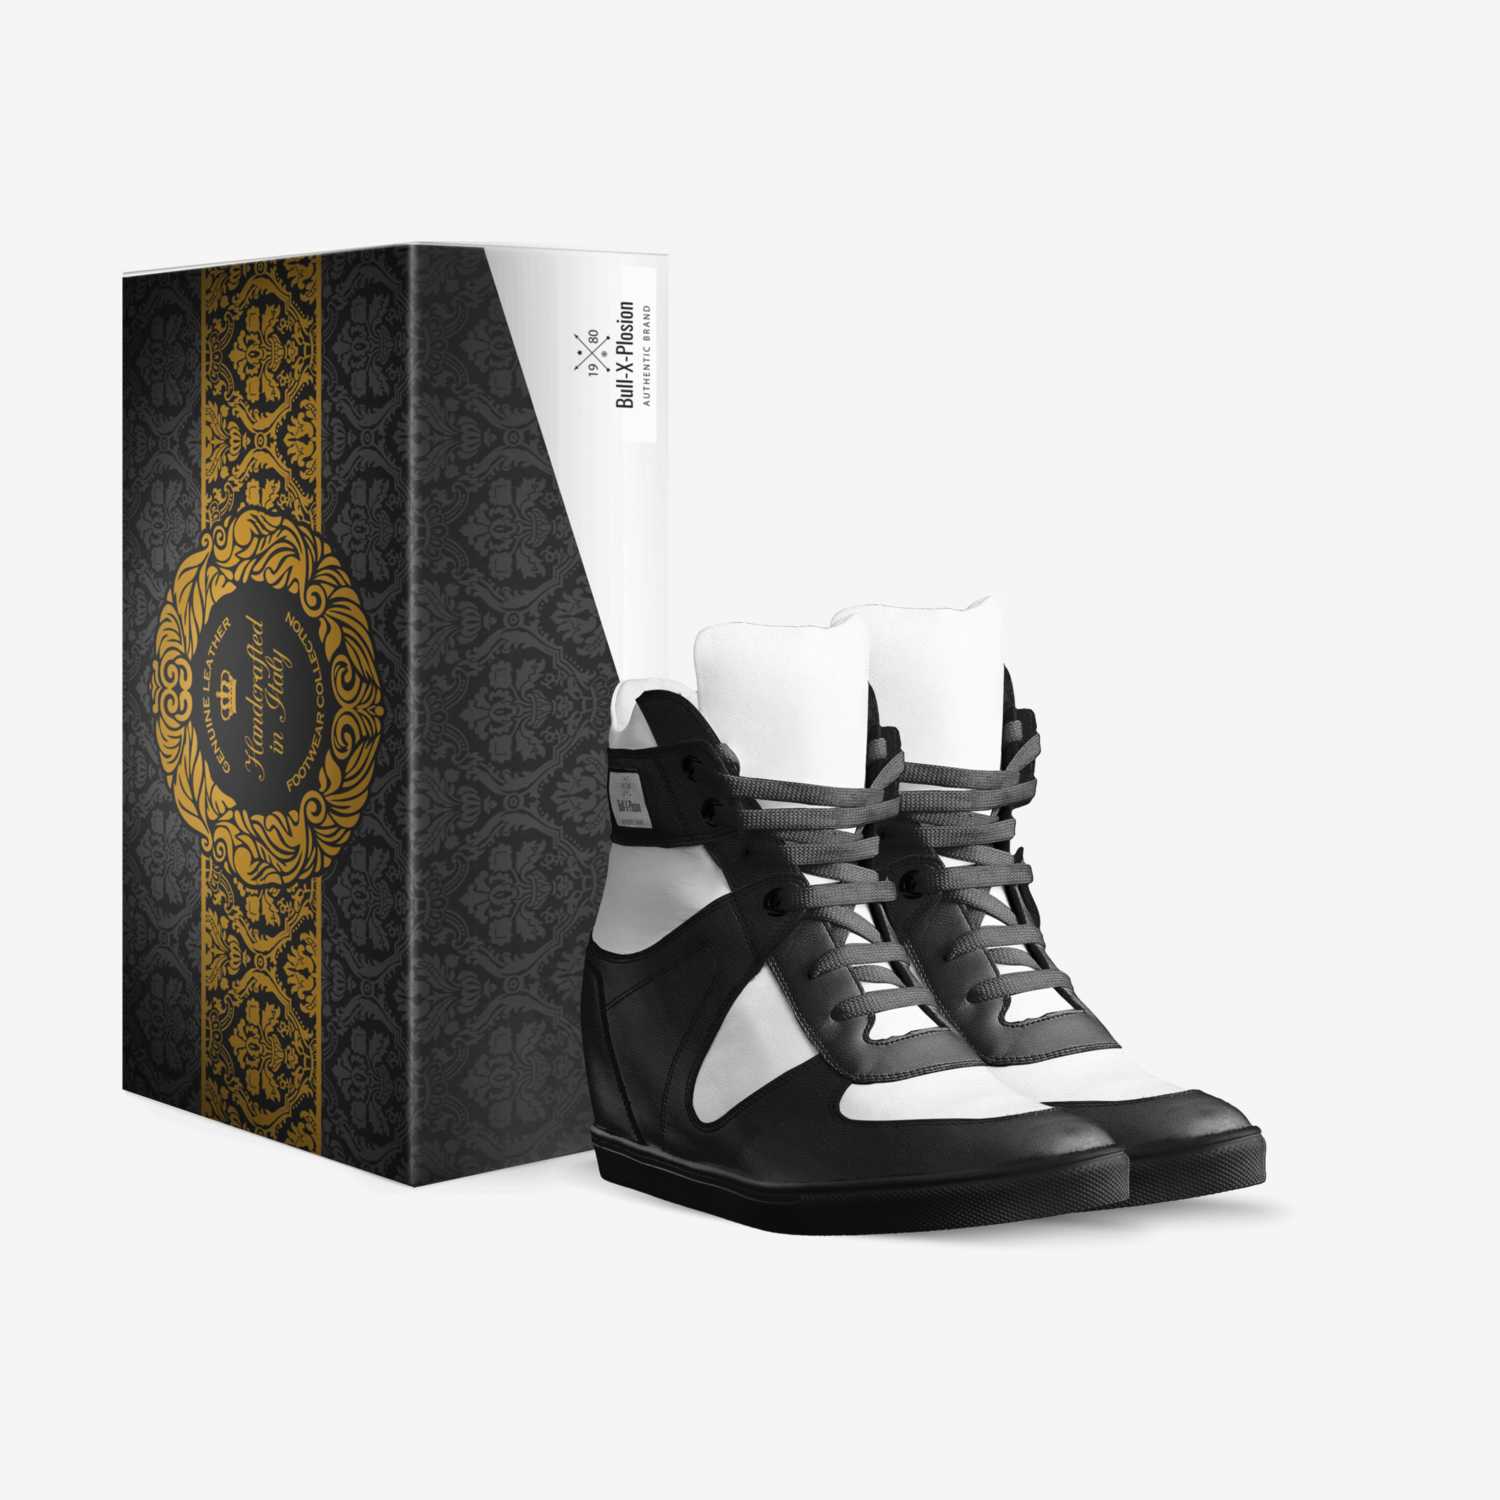 Bull-X-Plosion custom made in Italy shoes by Nikolay Kotov | Box view